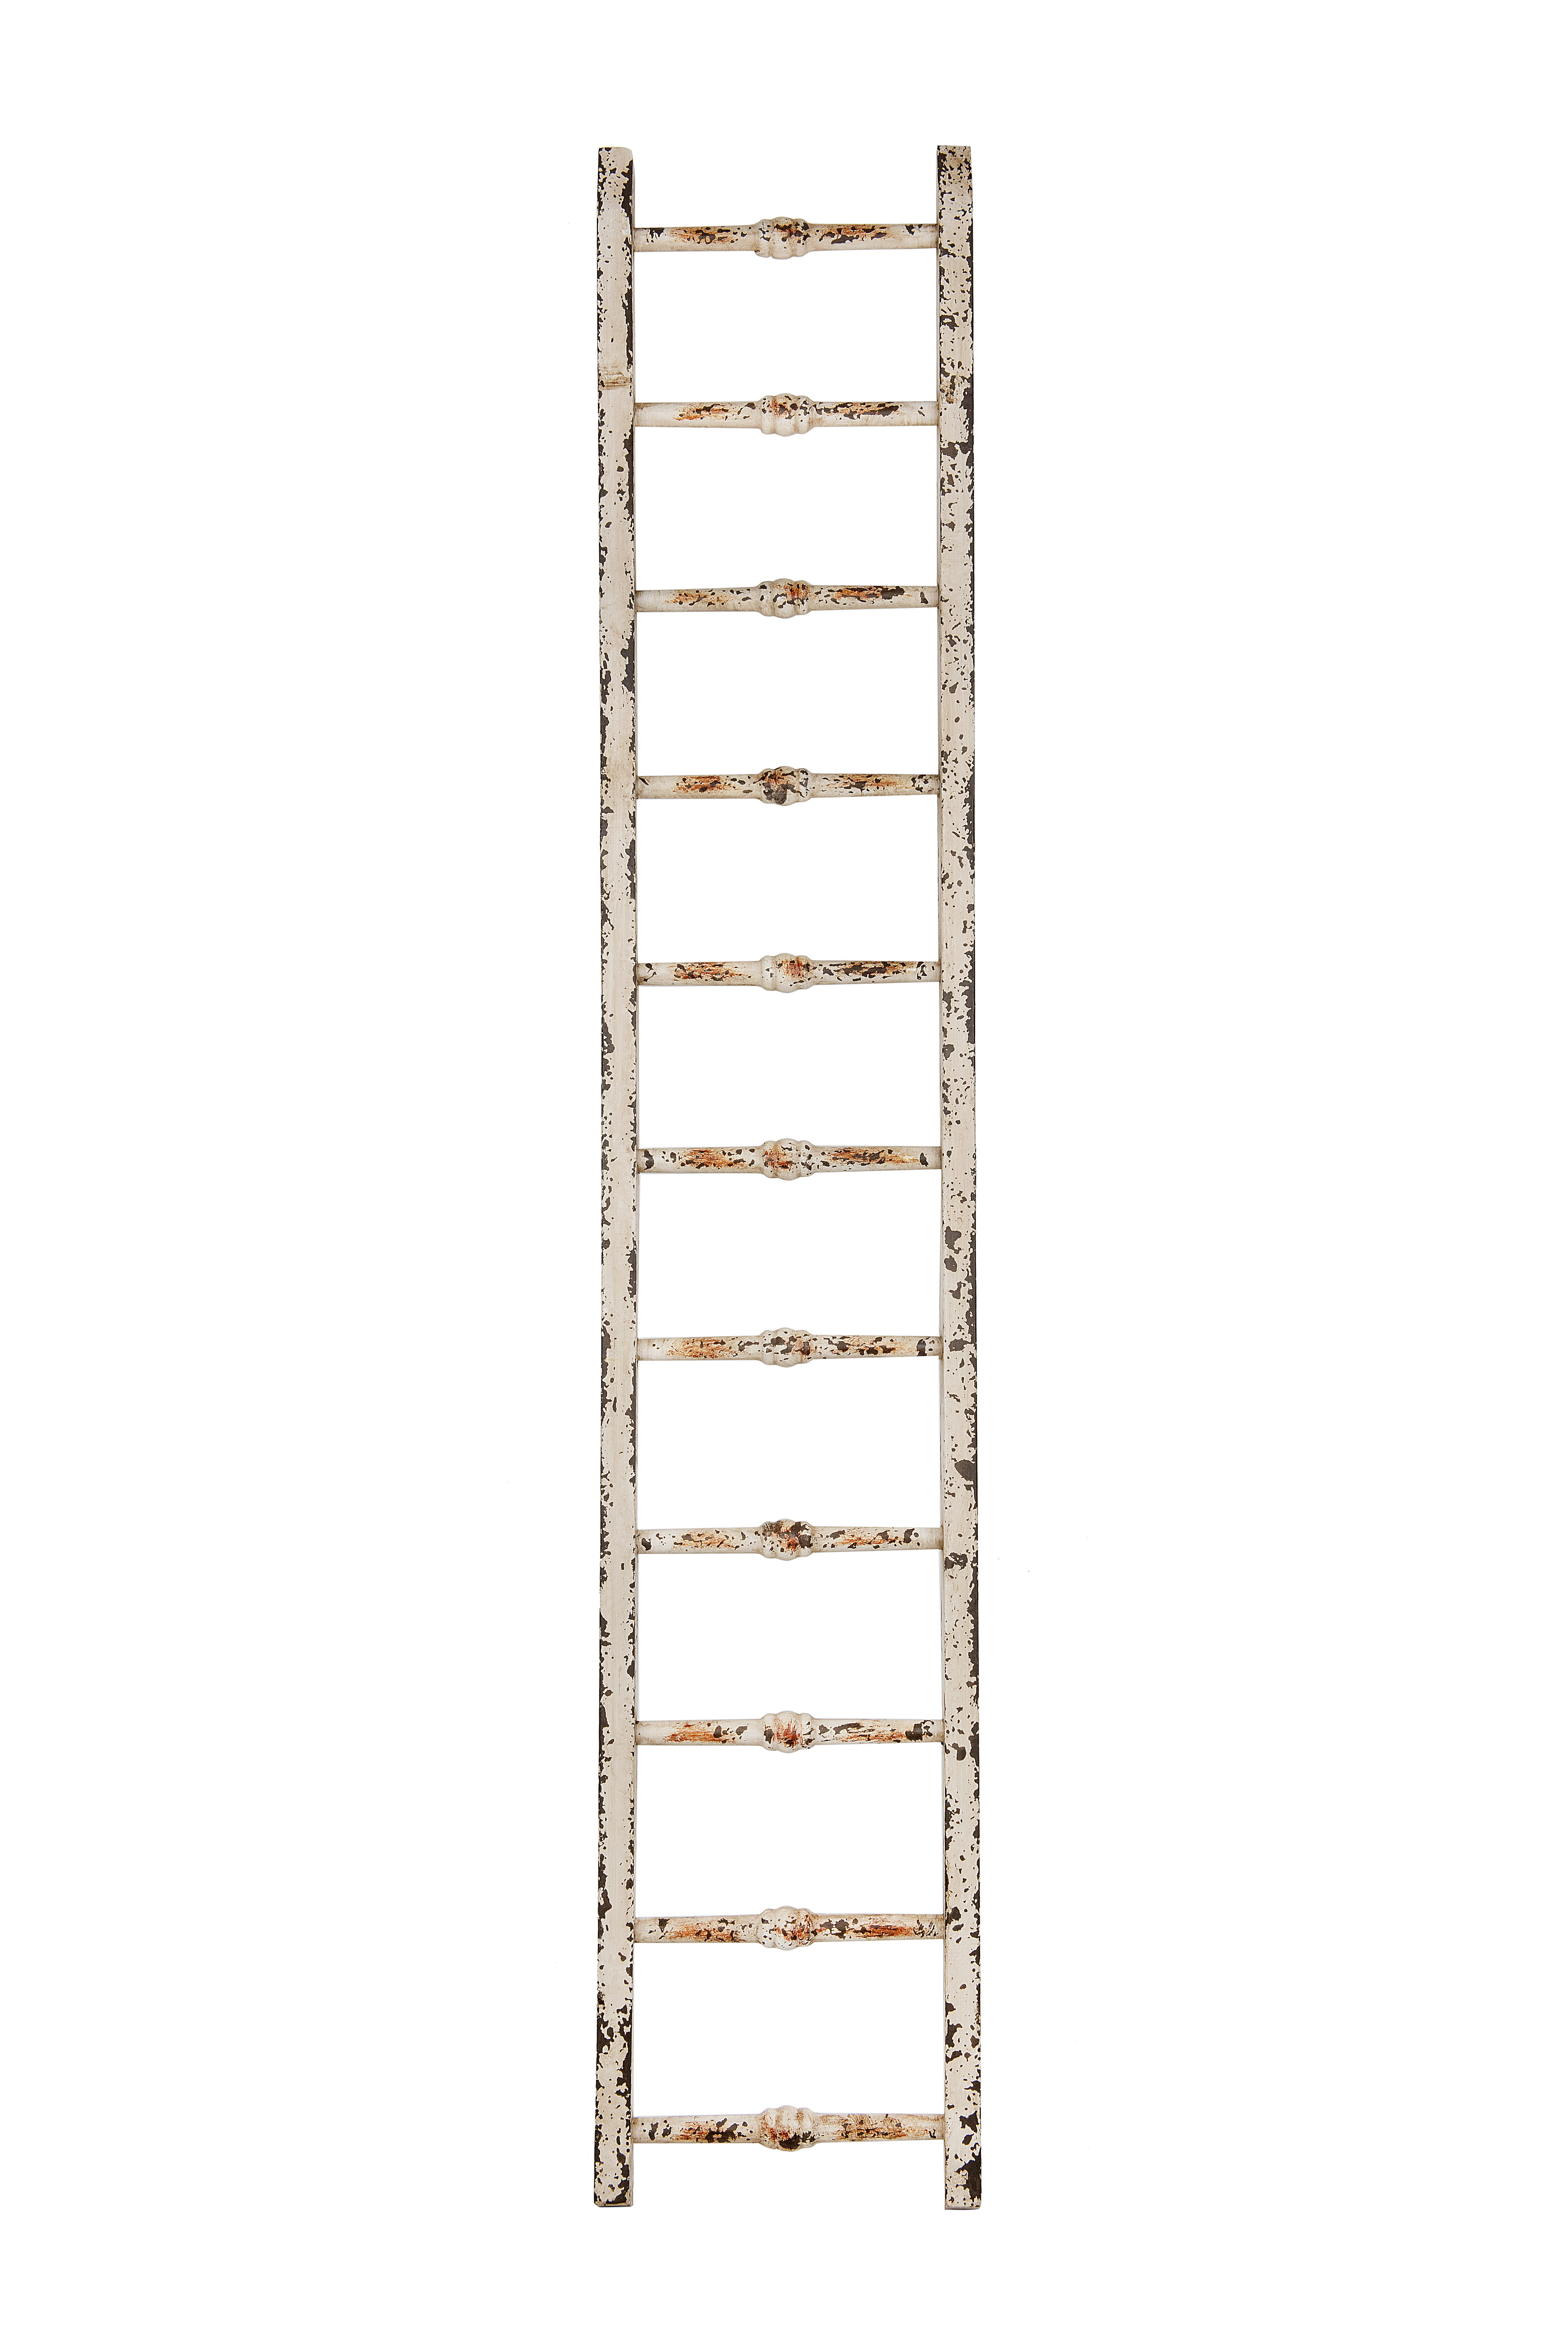 Decorative Wood Ladder - Nomad Home